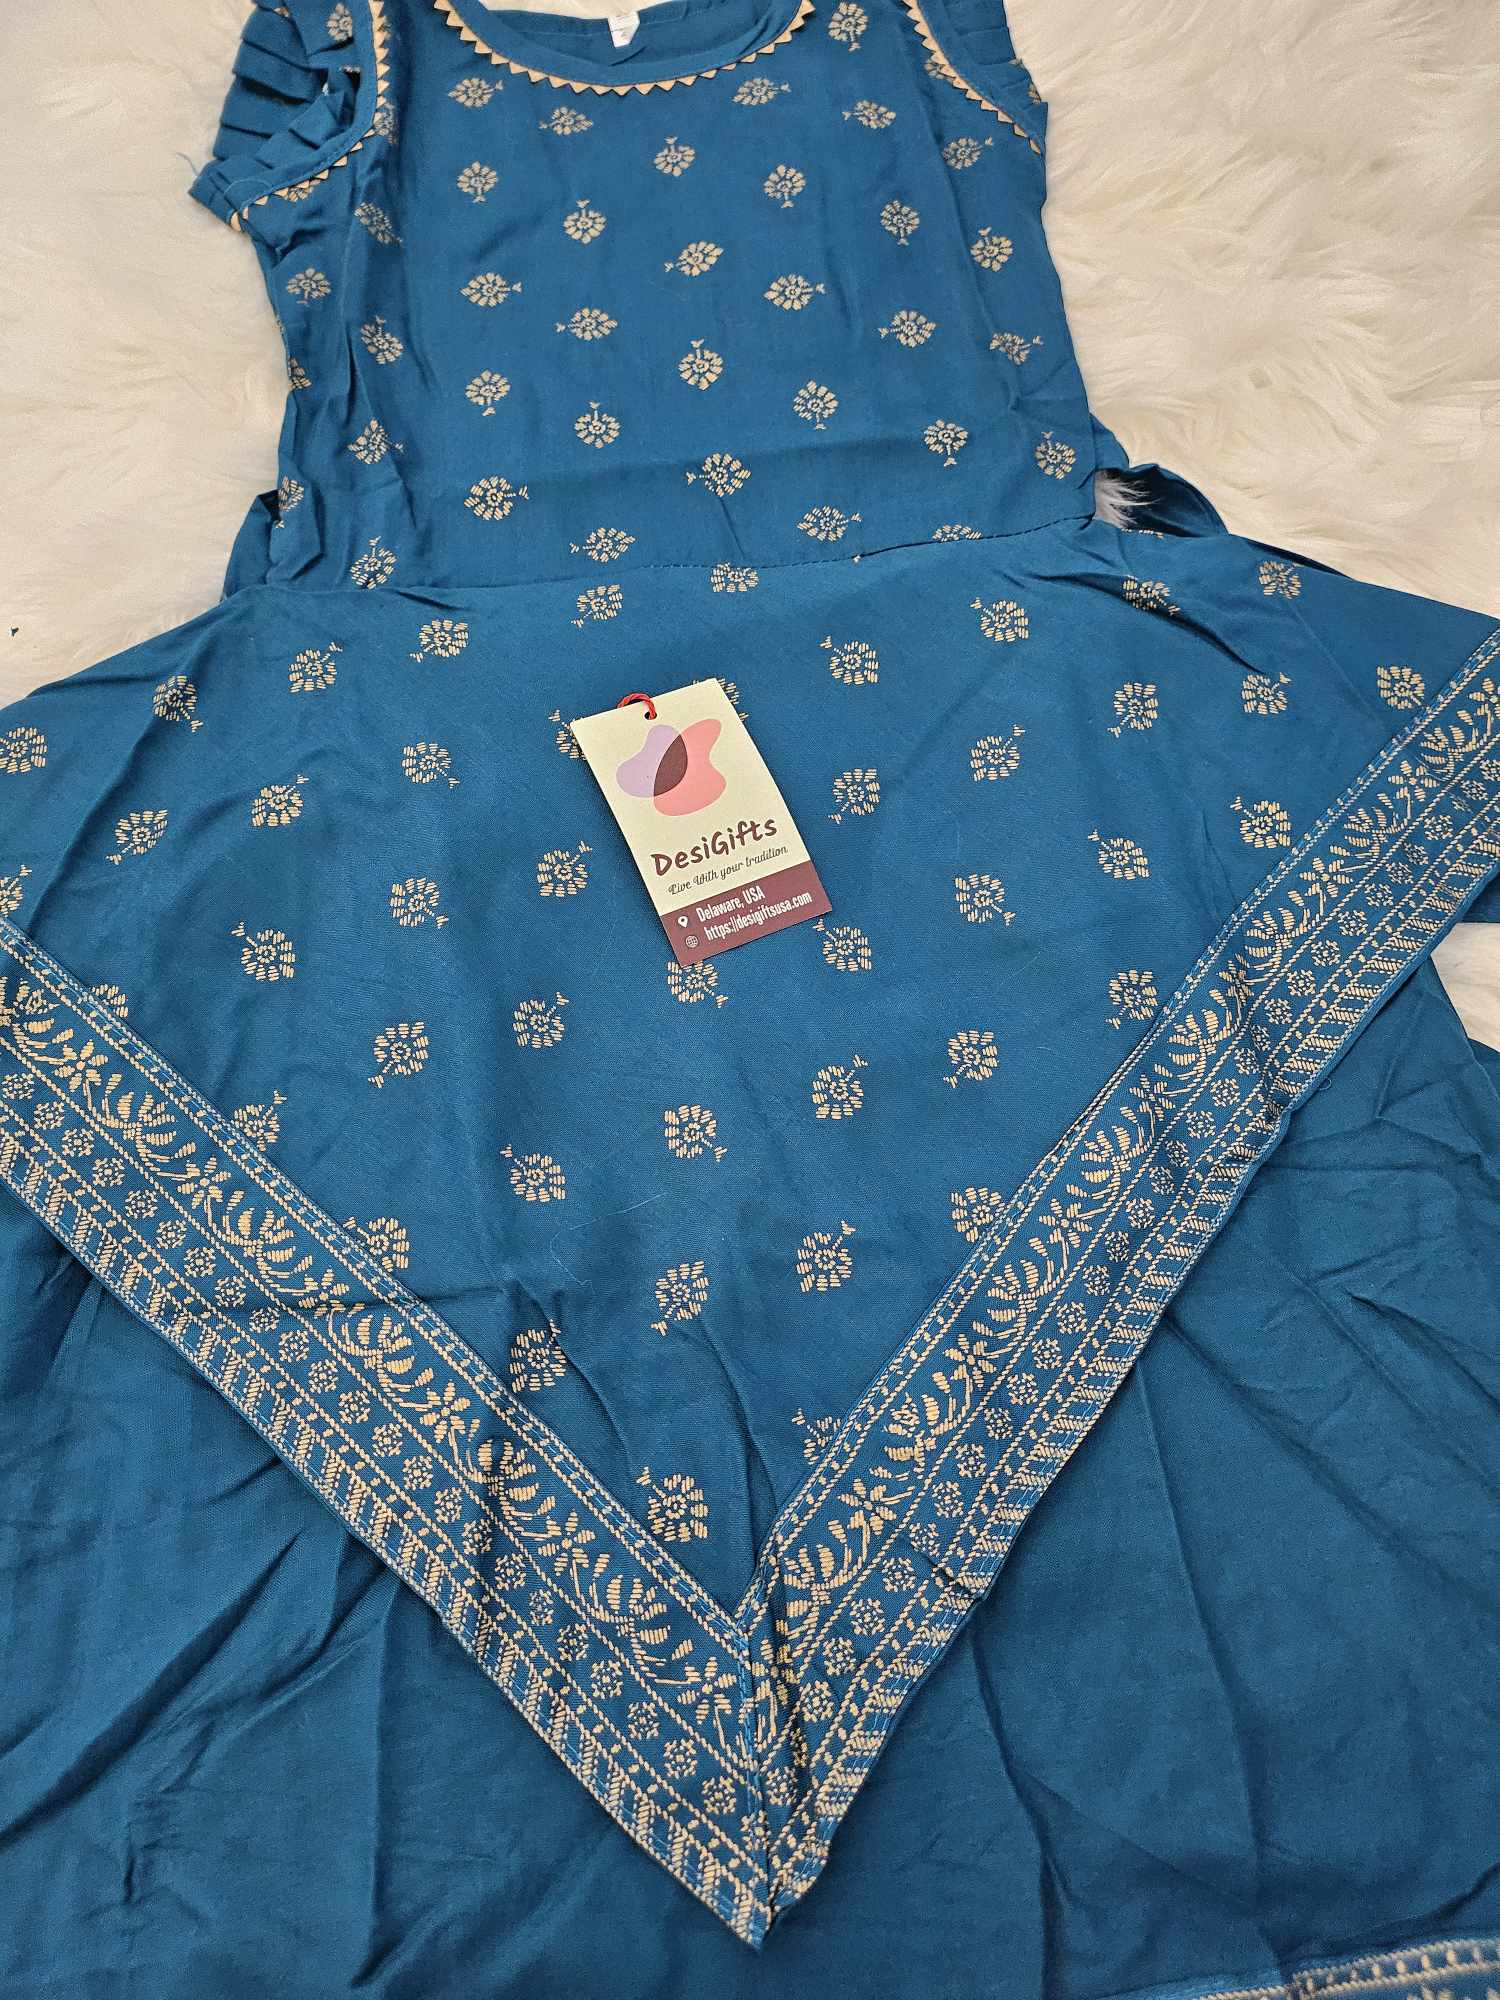 Elegant Rayon with Foil Print Indian Dress for Princess, Girl, Design GRL # 1259